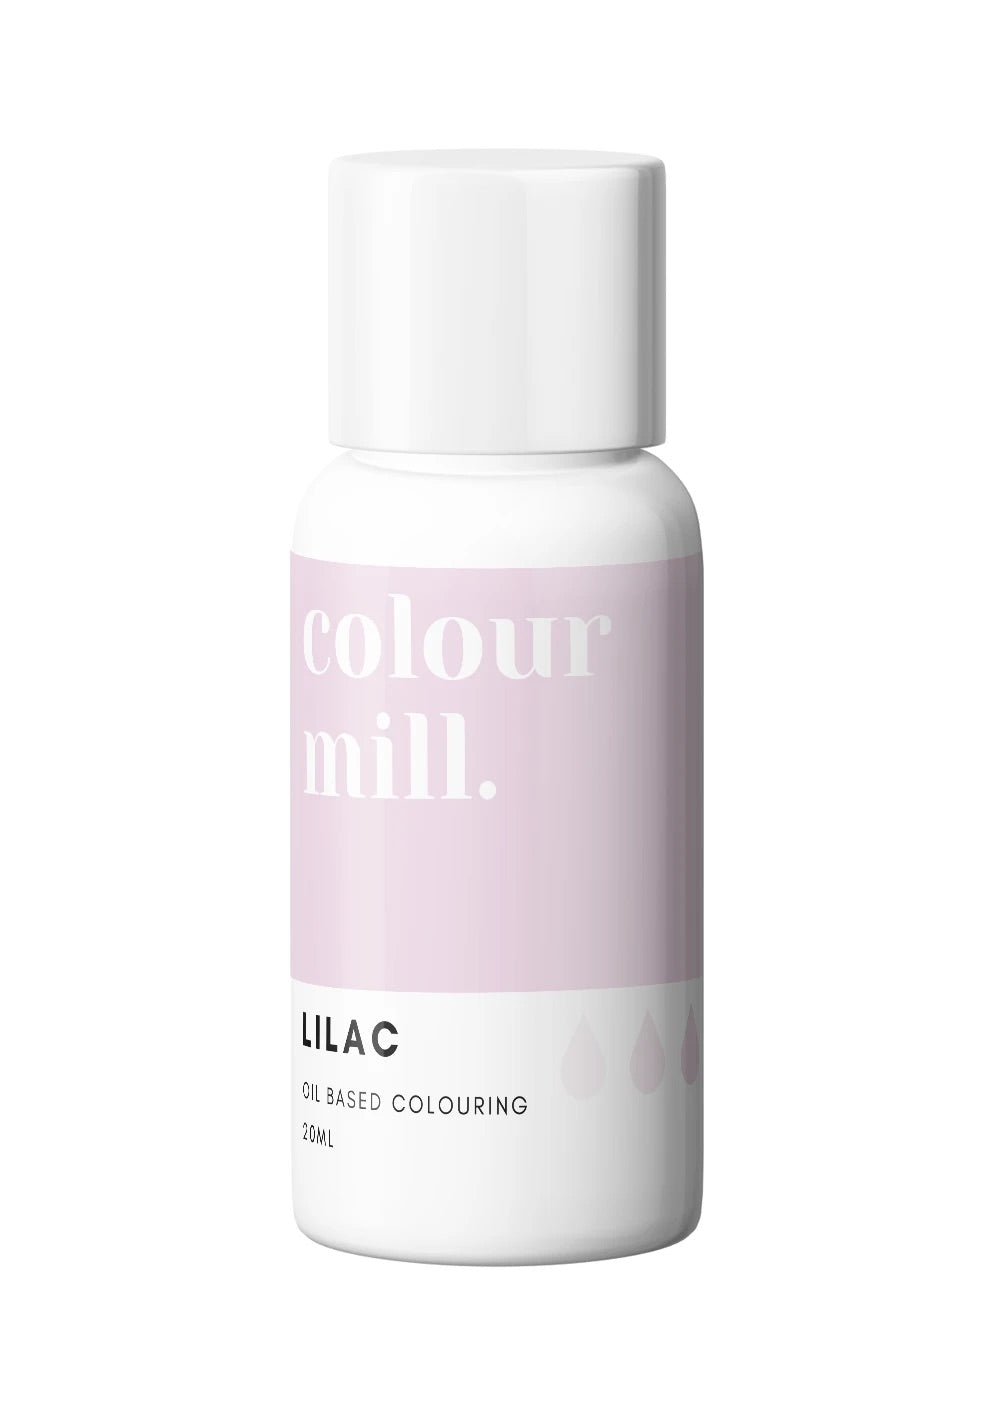 Colour Mill - Lilac - 20ml